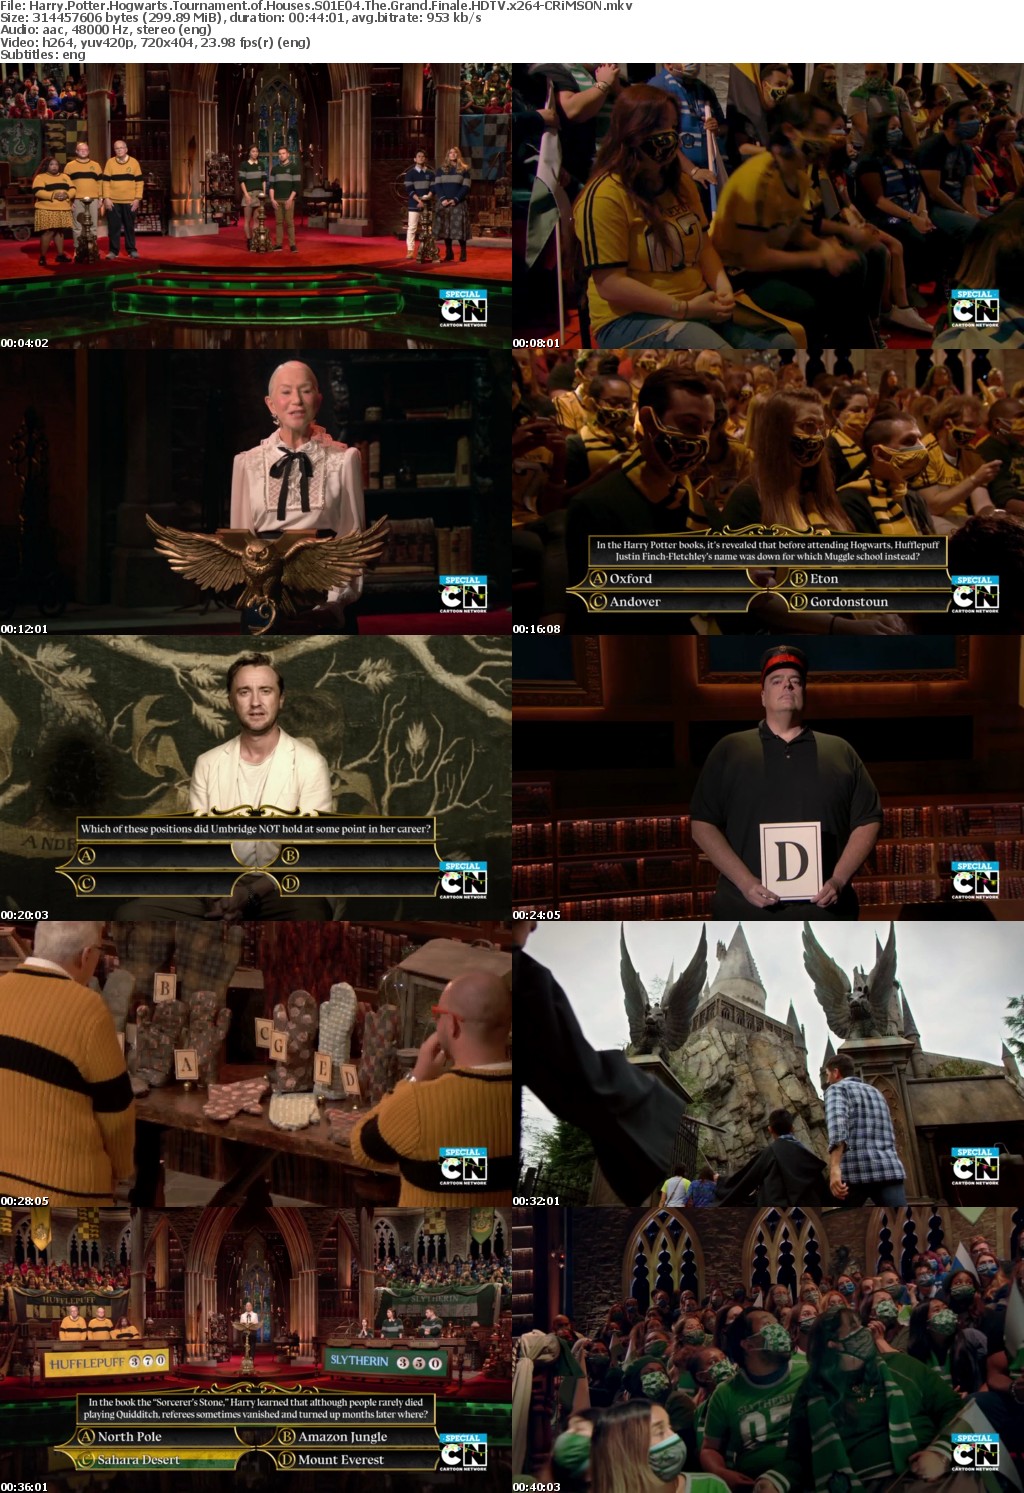 Harry Potter Hogwarts Tournament of Houses S01E04 The Grand Finale HDTV x264-CRiMSON